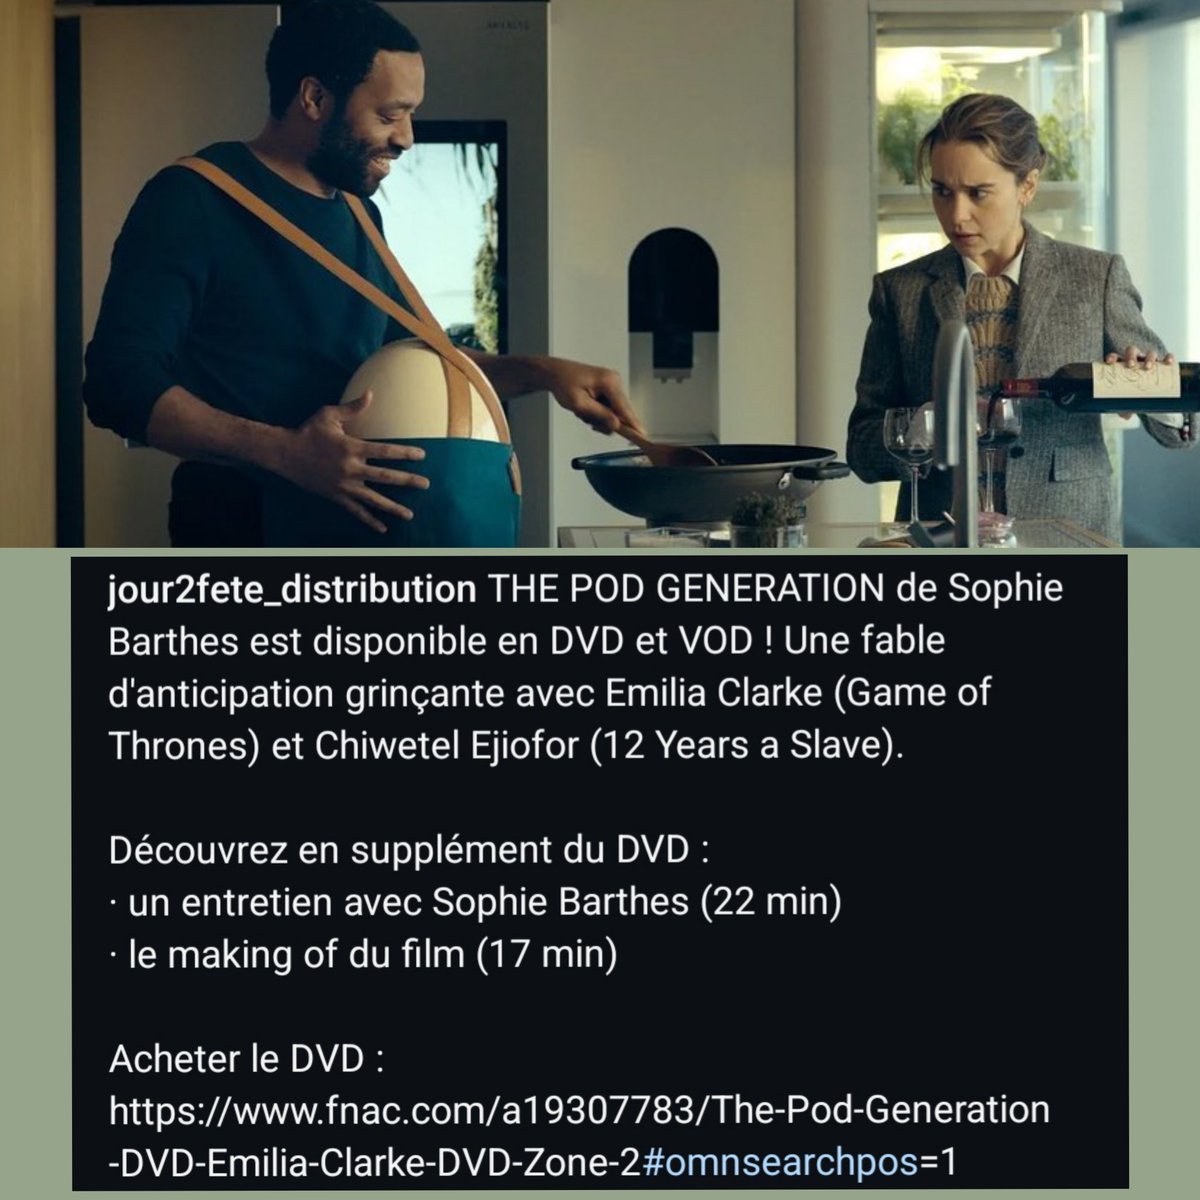 #ThePodGeneration 🥚👶is available now on DVD mode.
#EmiliaClarke  #ChiwetelEjiofor 
(via @jour2fete instagram)